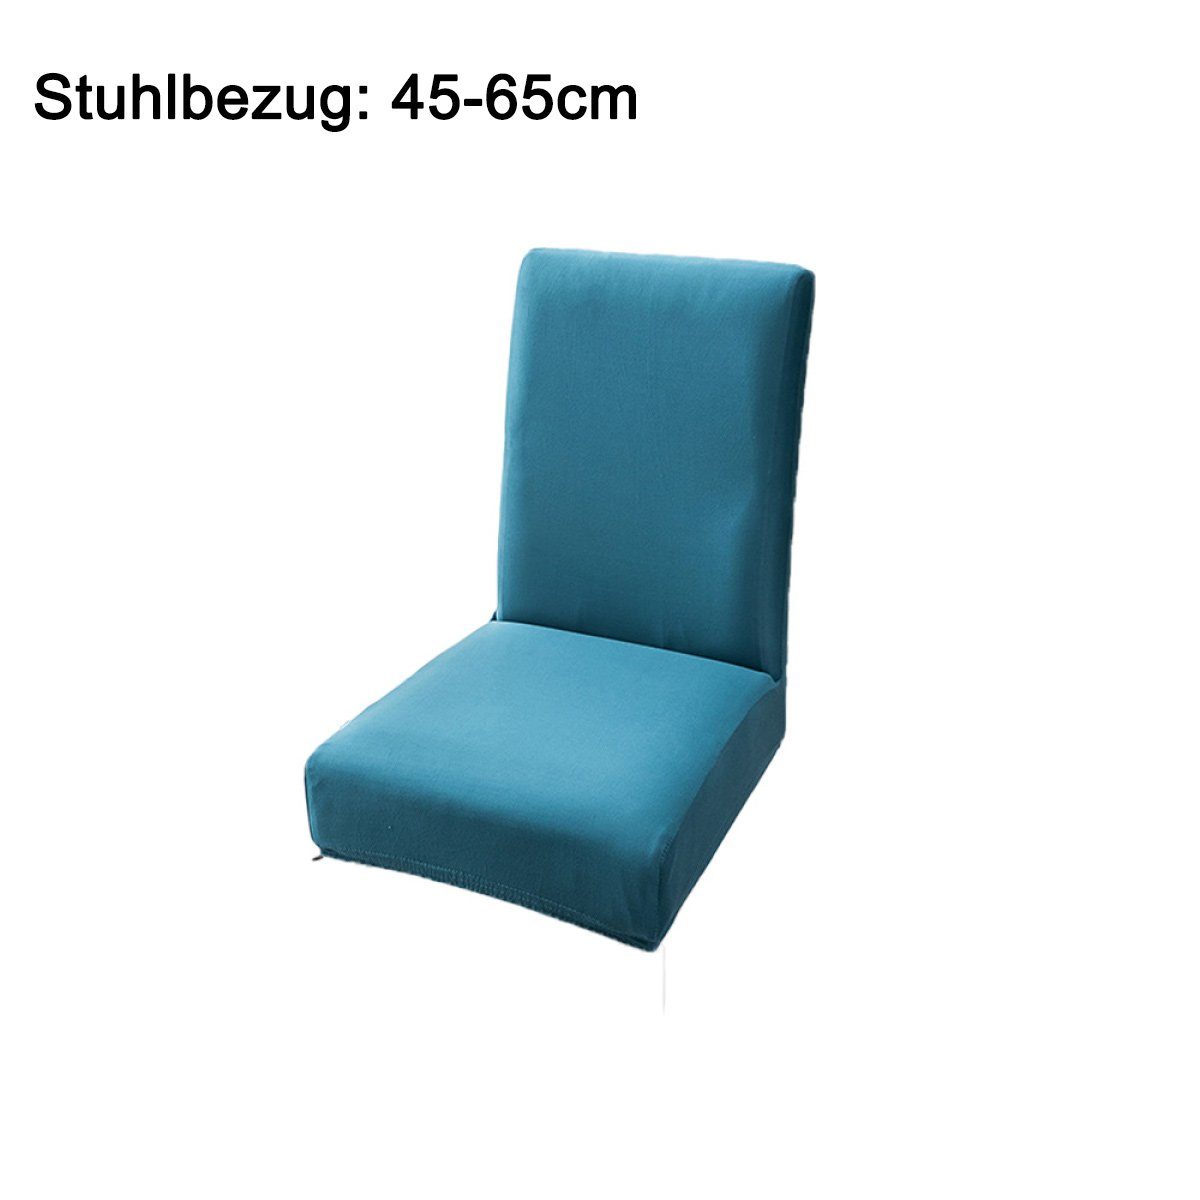 Juoungle Stuhlbezug Stuhlhusse blau Stretch Abnehmbare Deko, Universal Stuhlhussen für